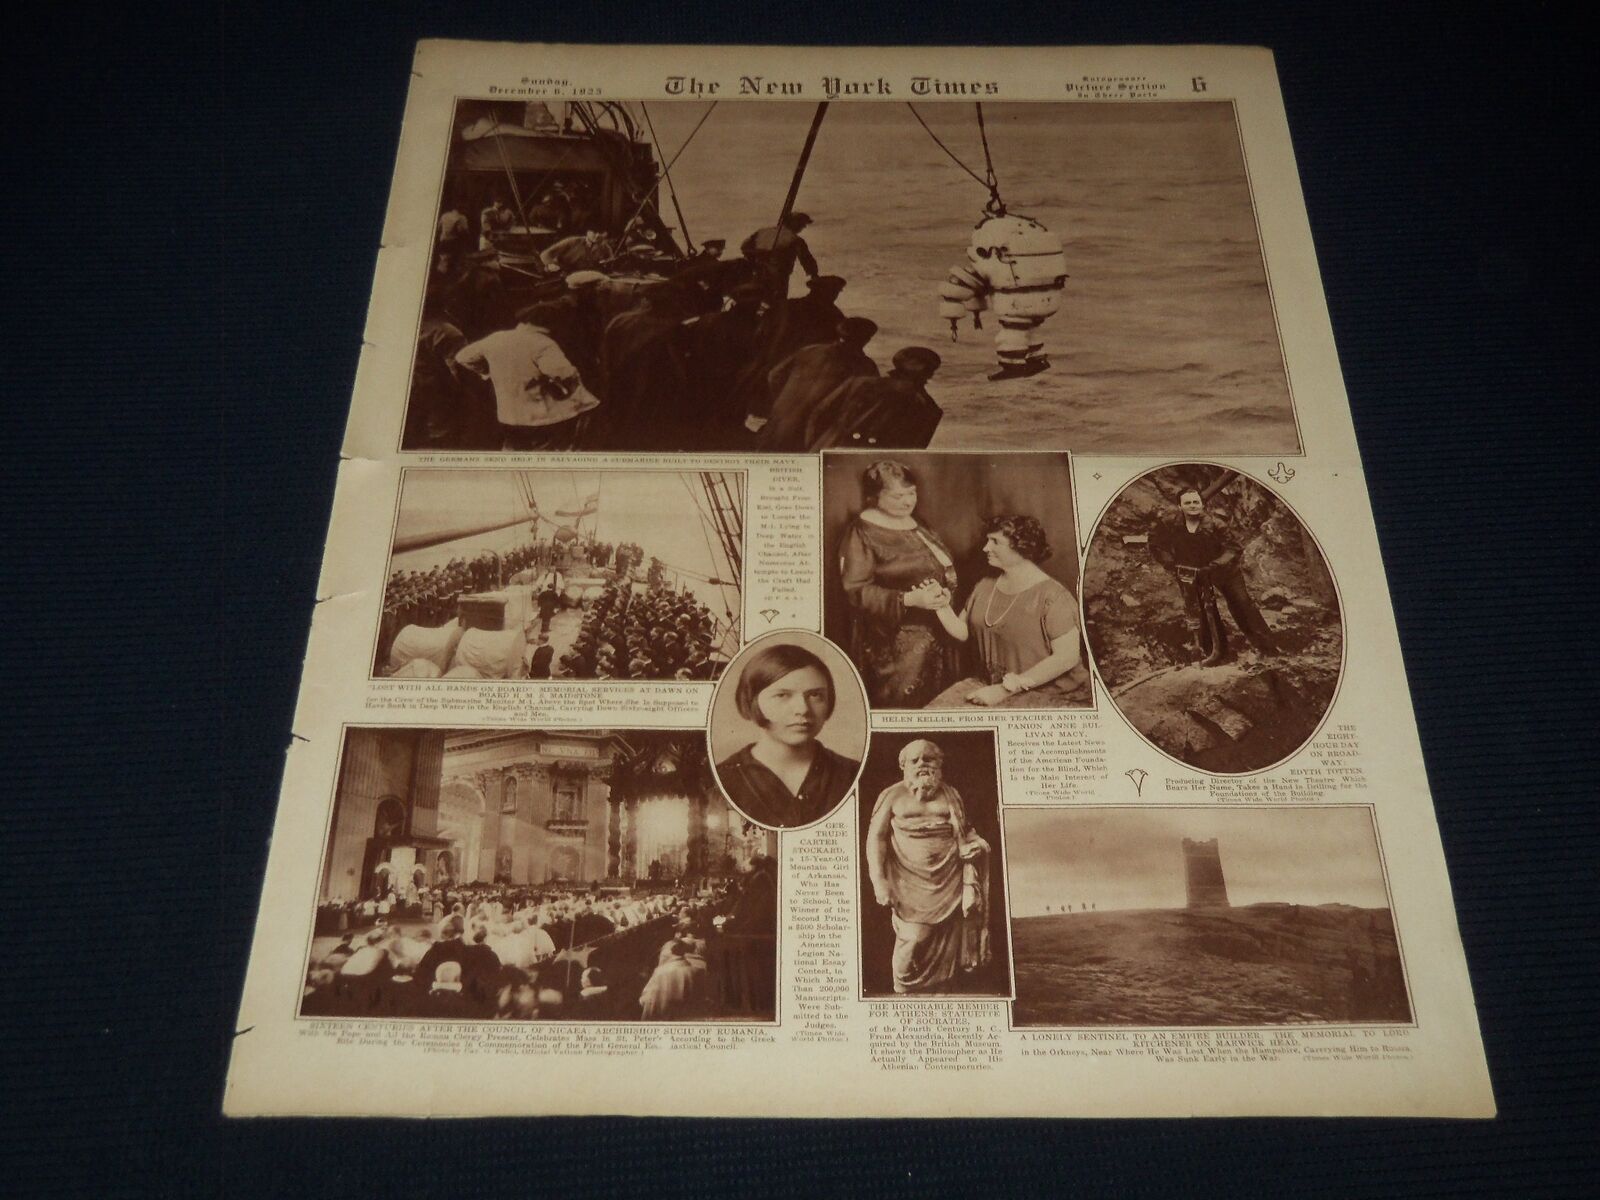 1925 DECEMBER 6 NEW YORK TIMES PICTURE SECTION - HELEN KELLER - NT 9513